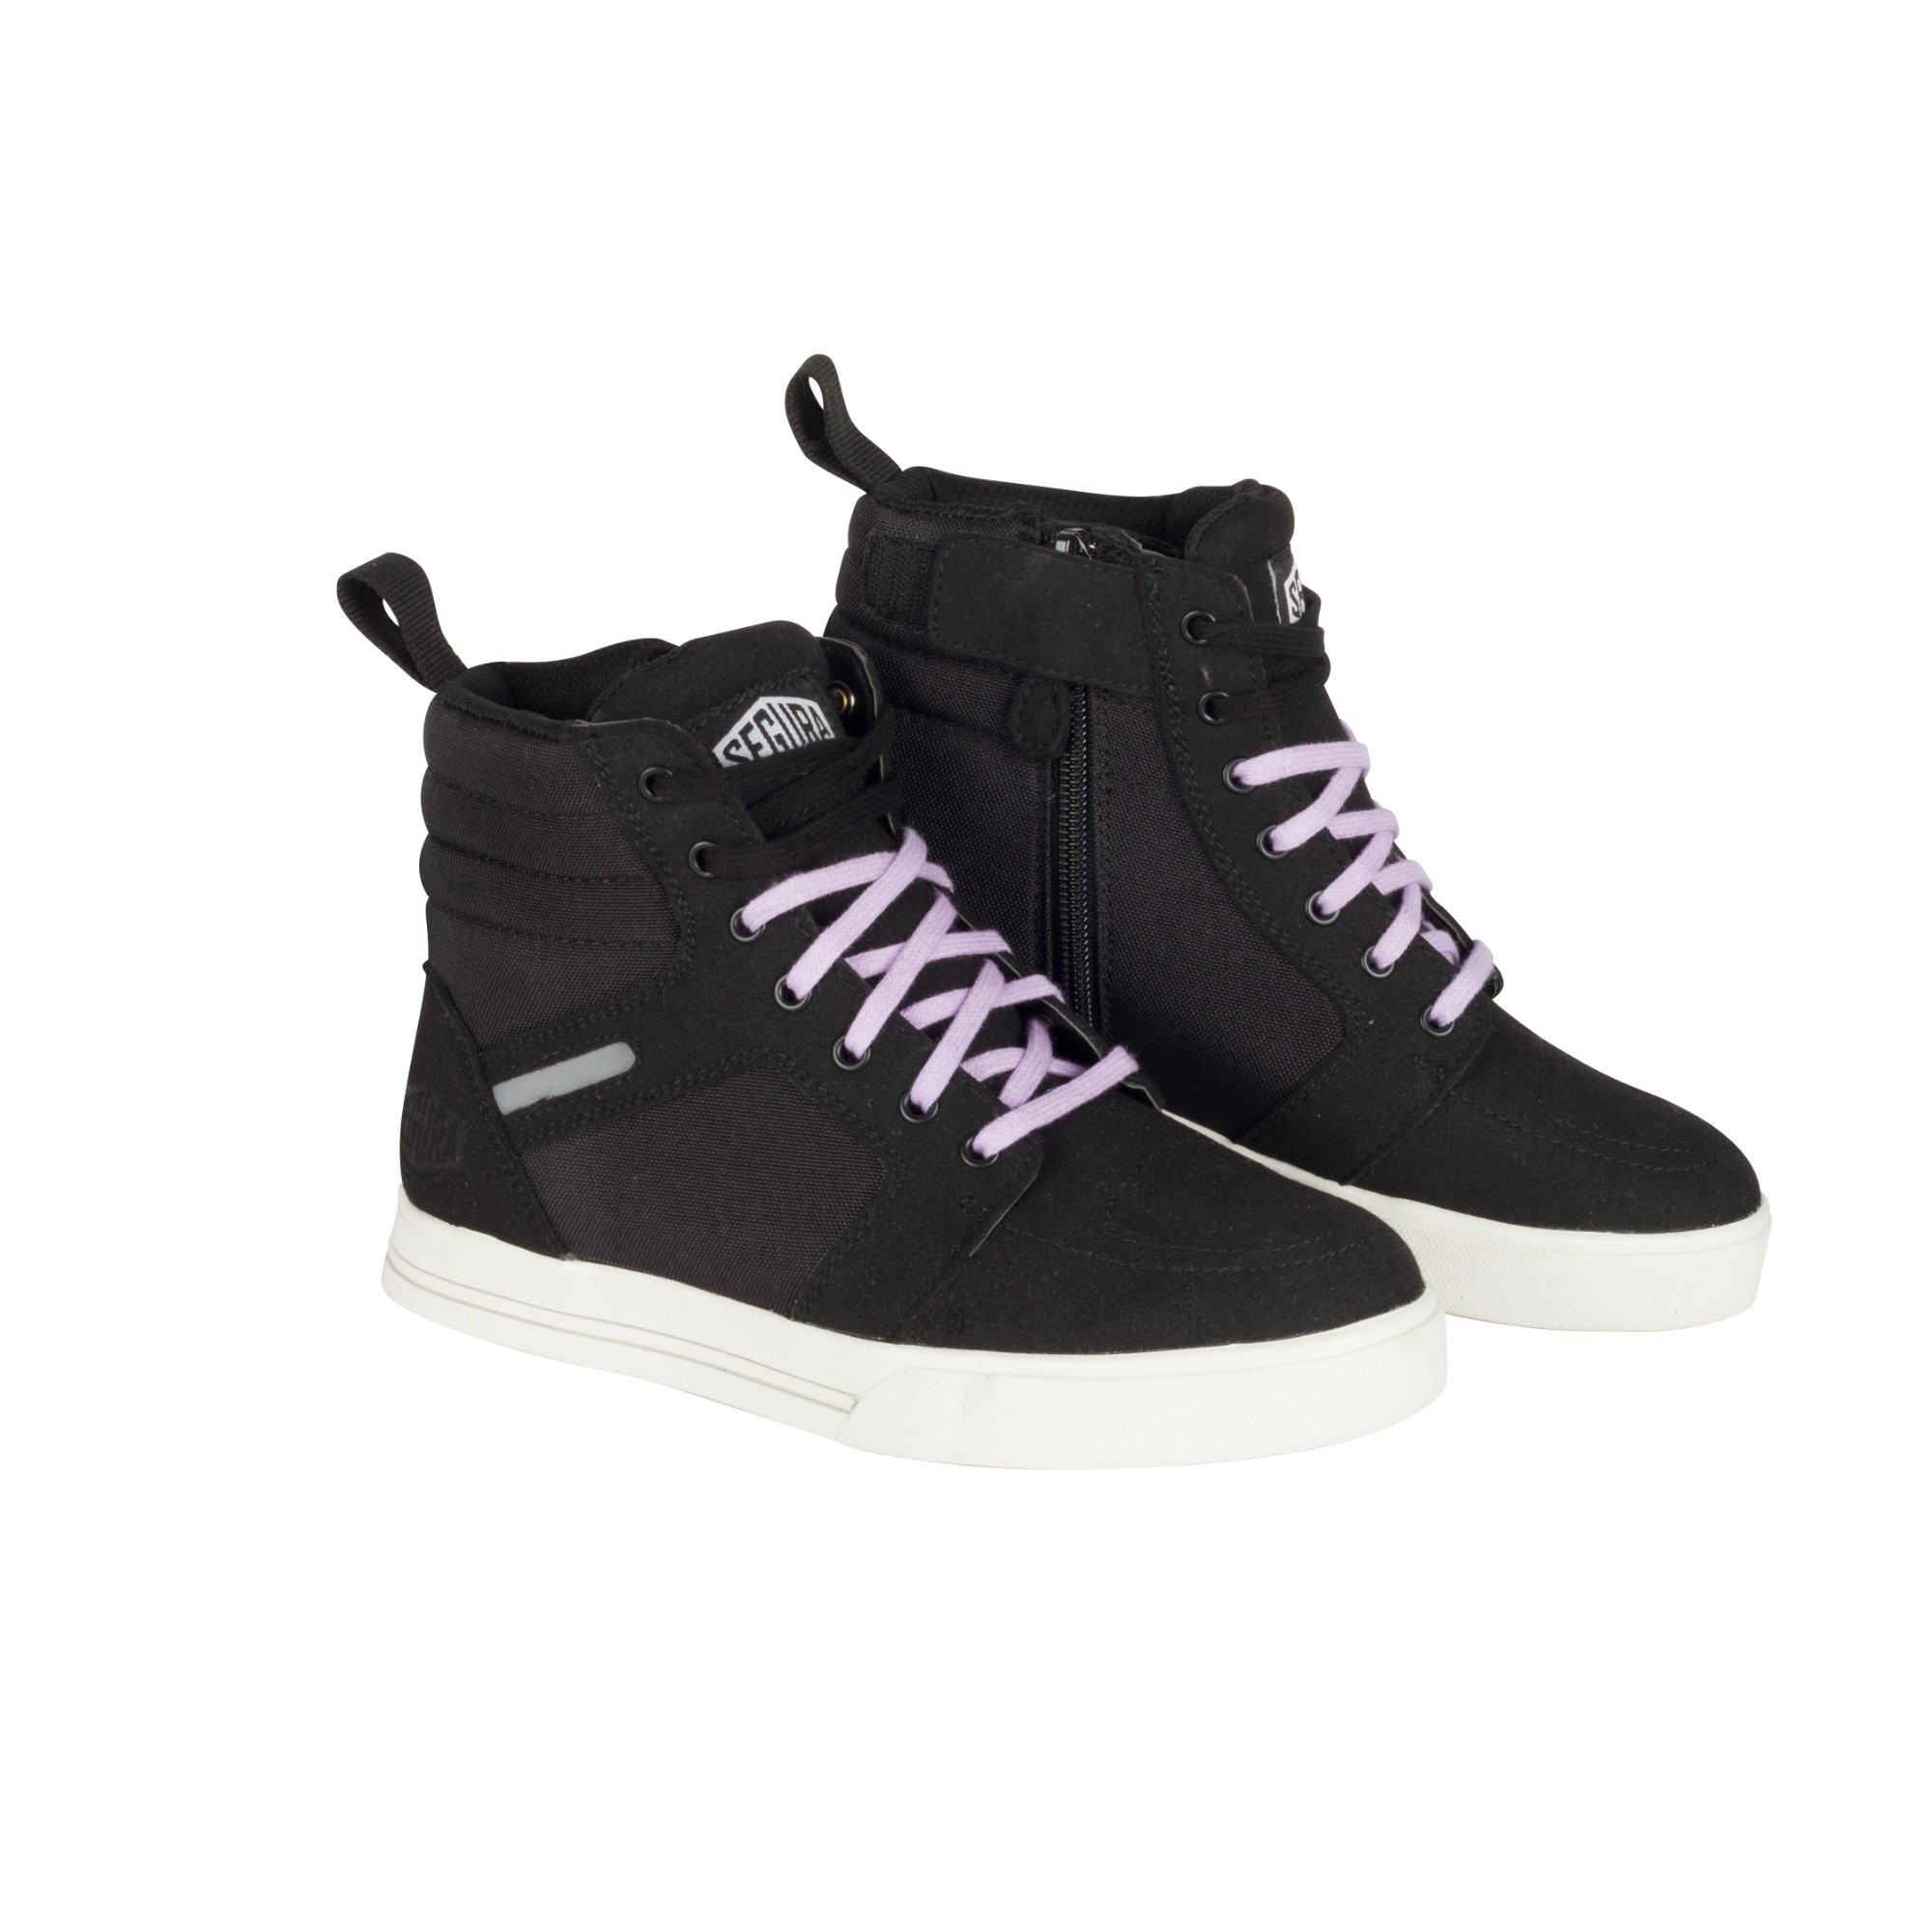 Image of Segura Lady Santana Sneakers Black Lilac Size 38 ID 3660815184165